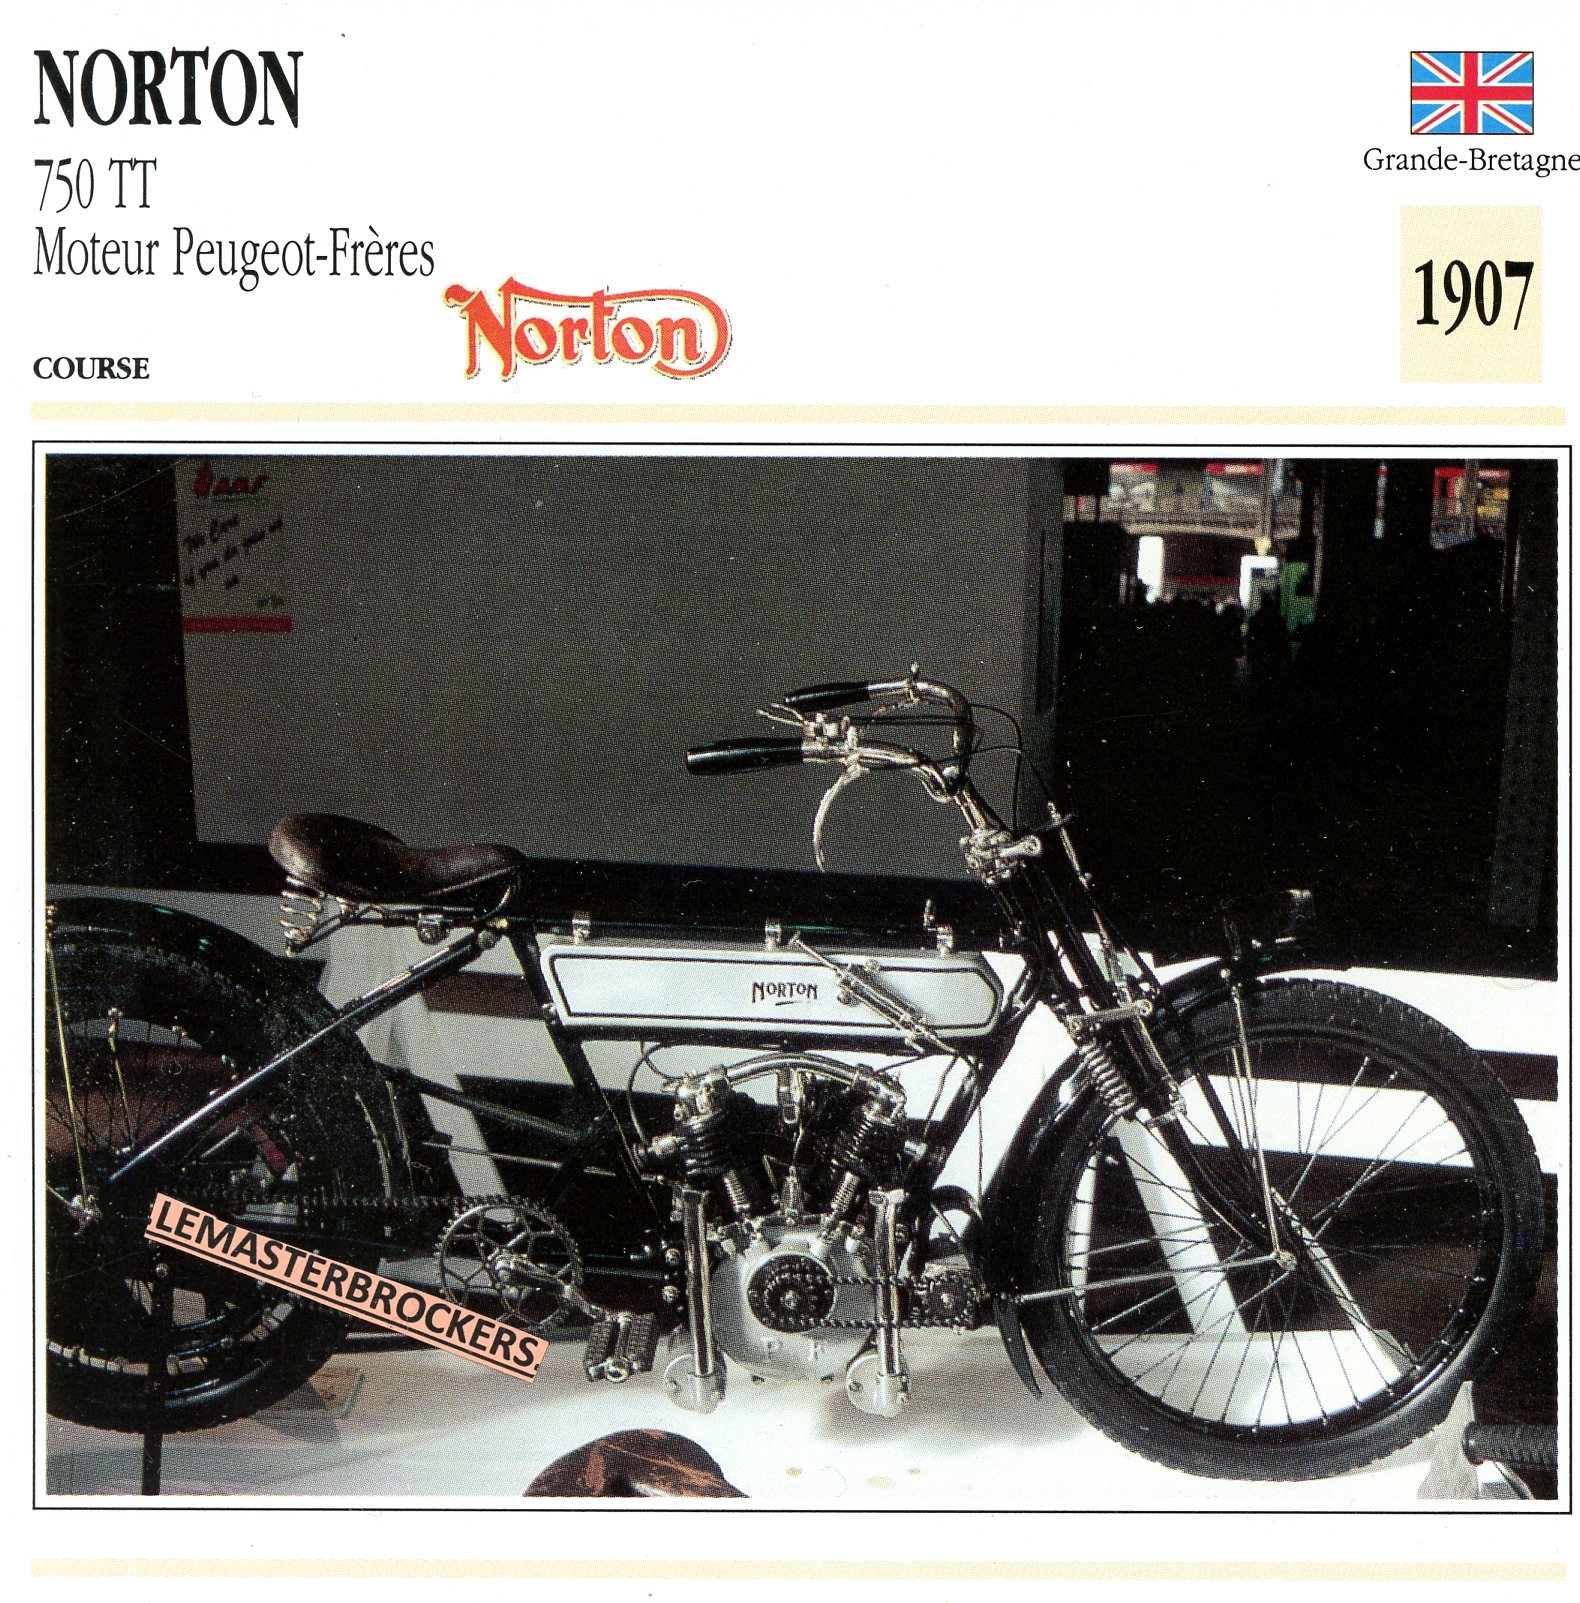 NORTON-750TT-PEUGEOT-FRÈRES-1907-FICHE-MOTO-ATLAS-lemasterbrockers-CARD-MOTORCYCLE